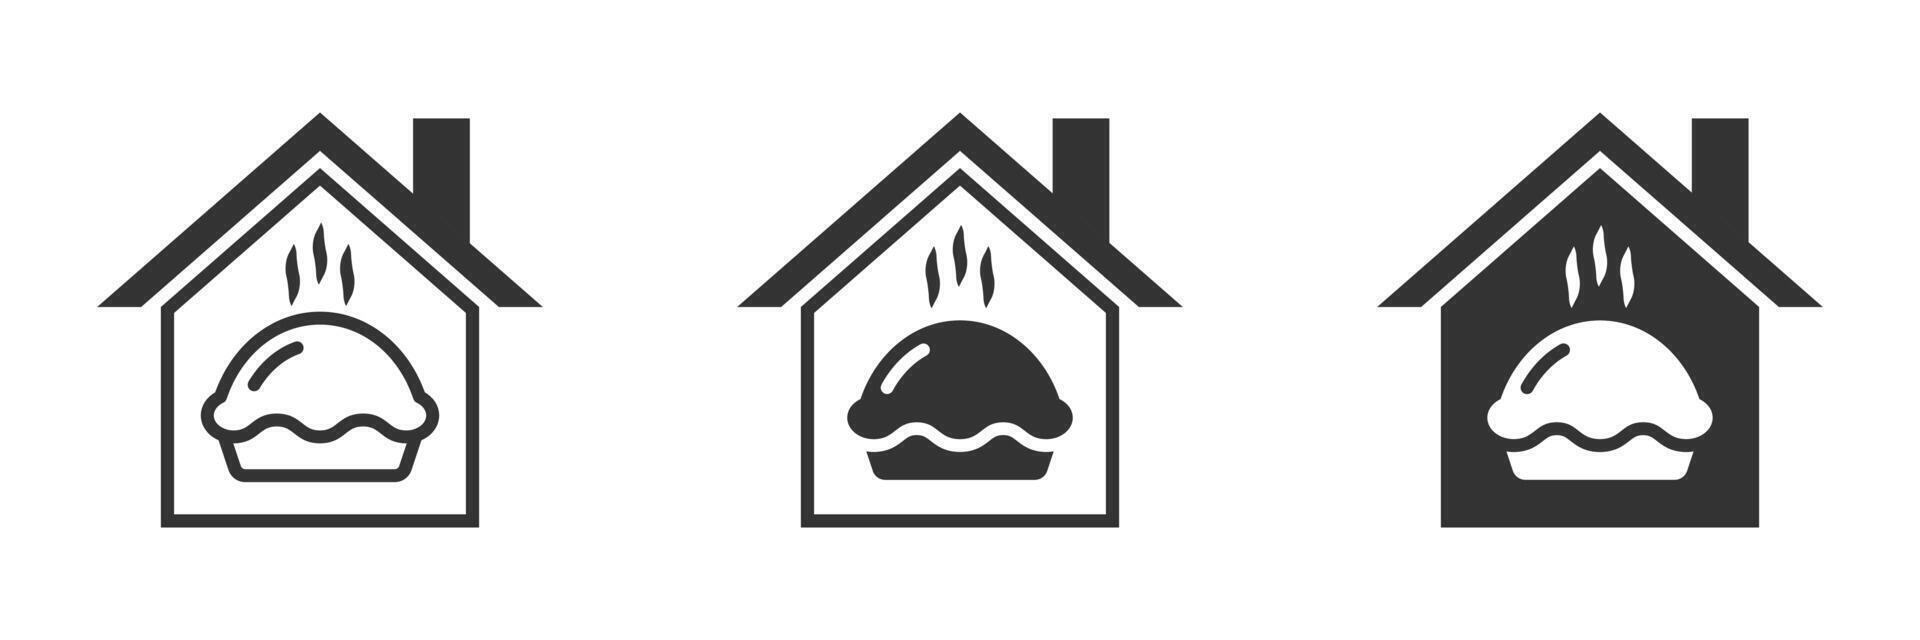 hus ikon med paj symbol inuti. vektor illustration.